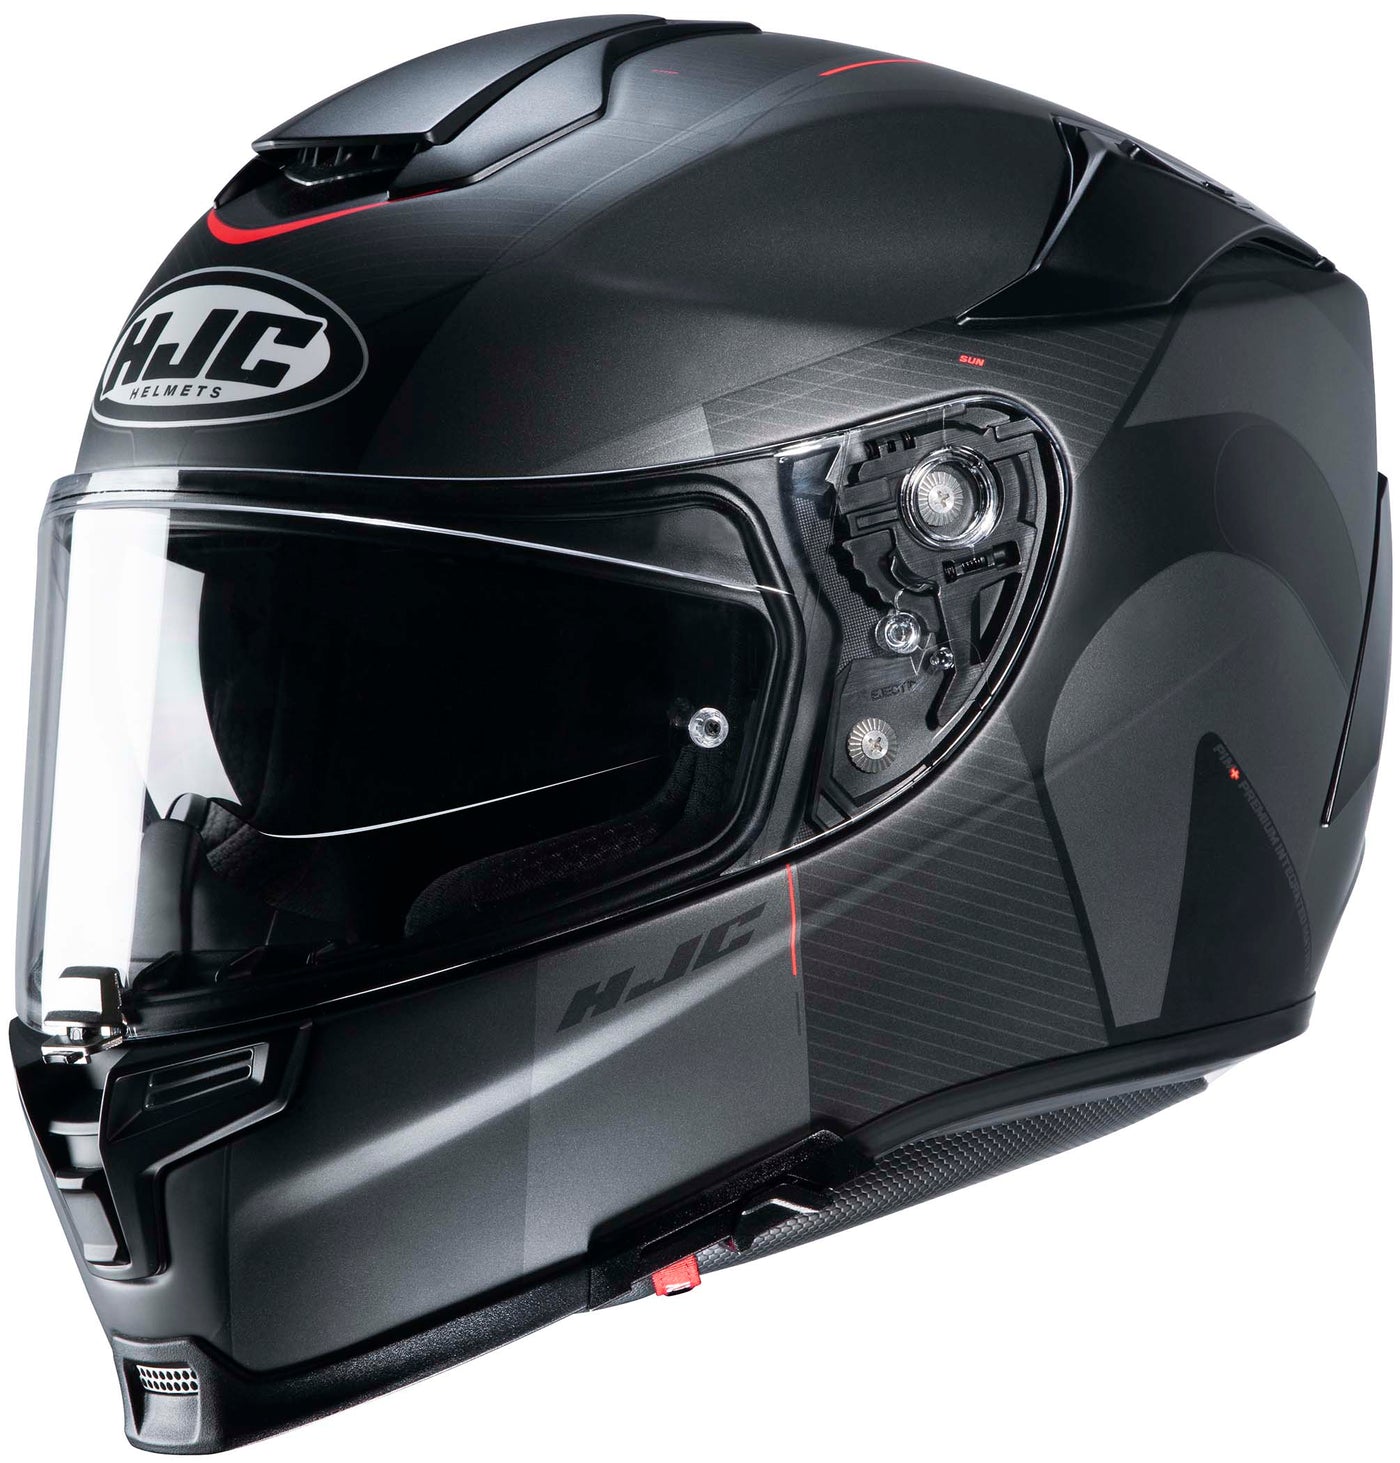 HJC RPHA 70 ST Wody Full Face Motorcycle Helmet